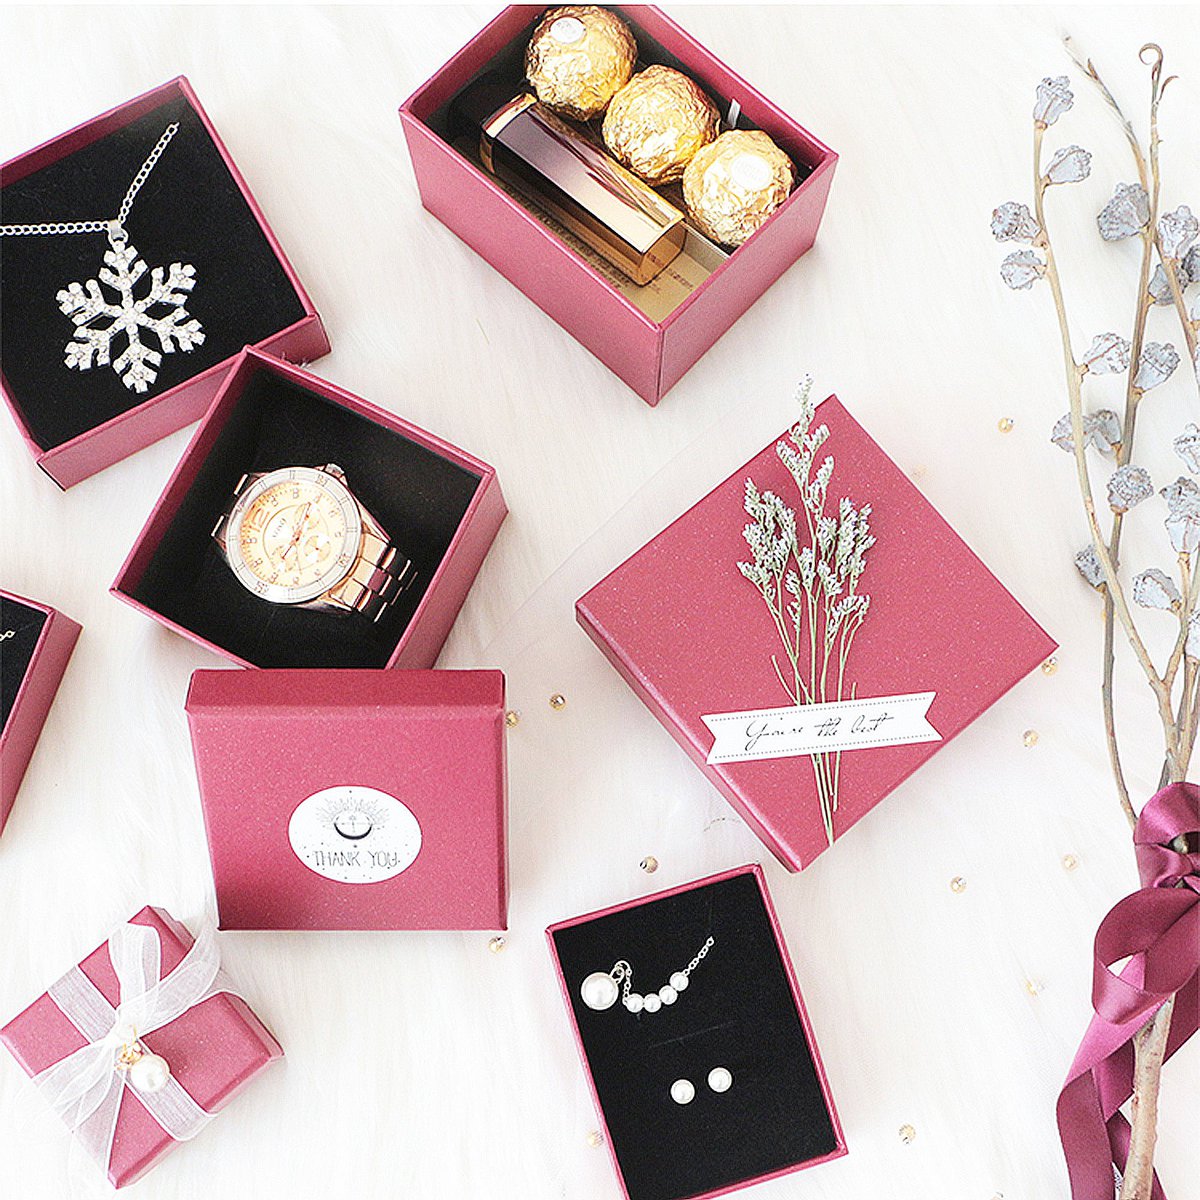 #etsy shop: Jewelry Gift box,Jewelry Paper box, Craft Jewelry Gift Box,Jewelry packaging,Watch box #jewelrygiftbox etsy.me/2C2M2ab